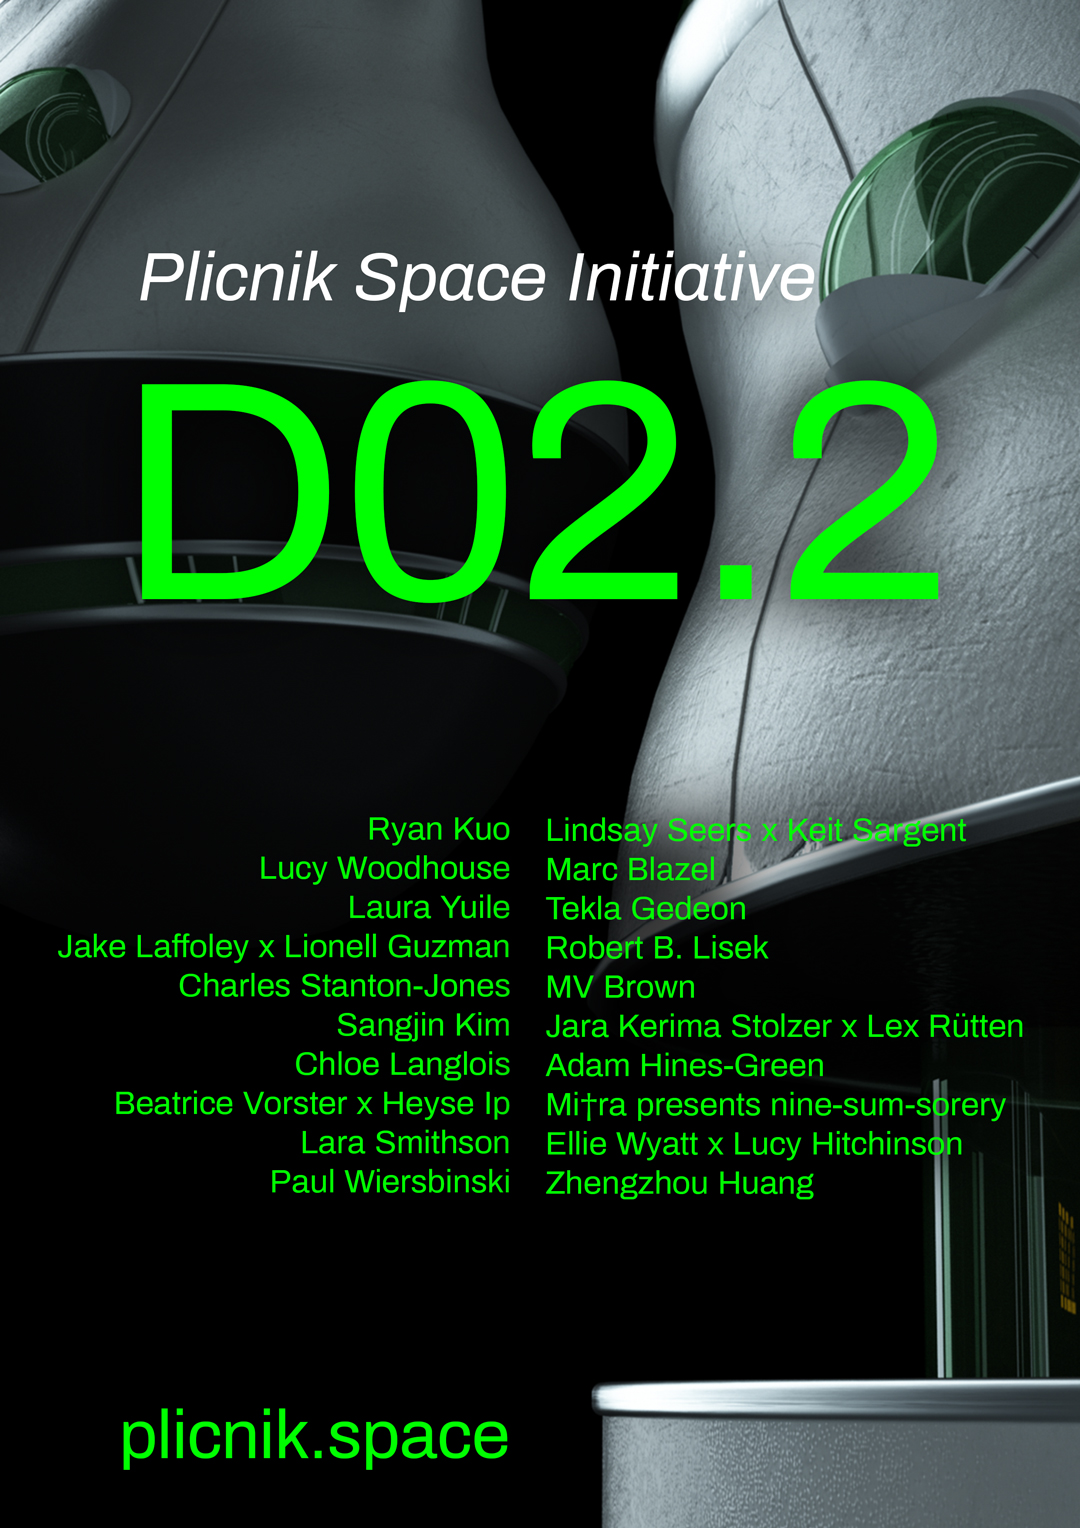 Post of the Plicnik Space Initiative D02.2 exhibition